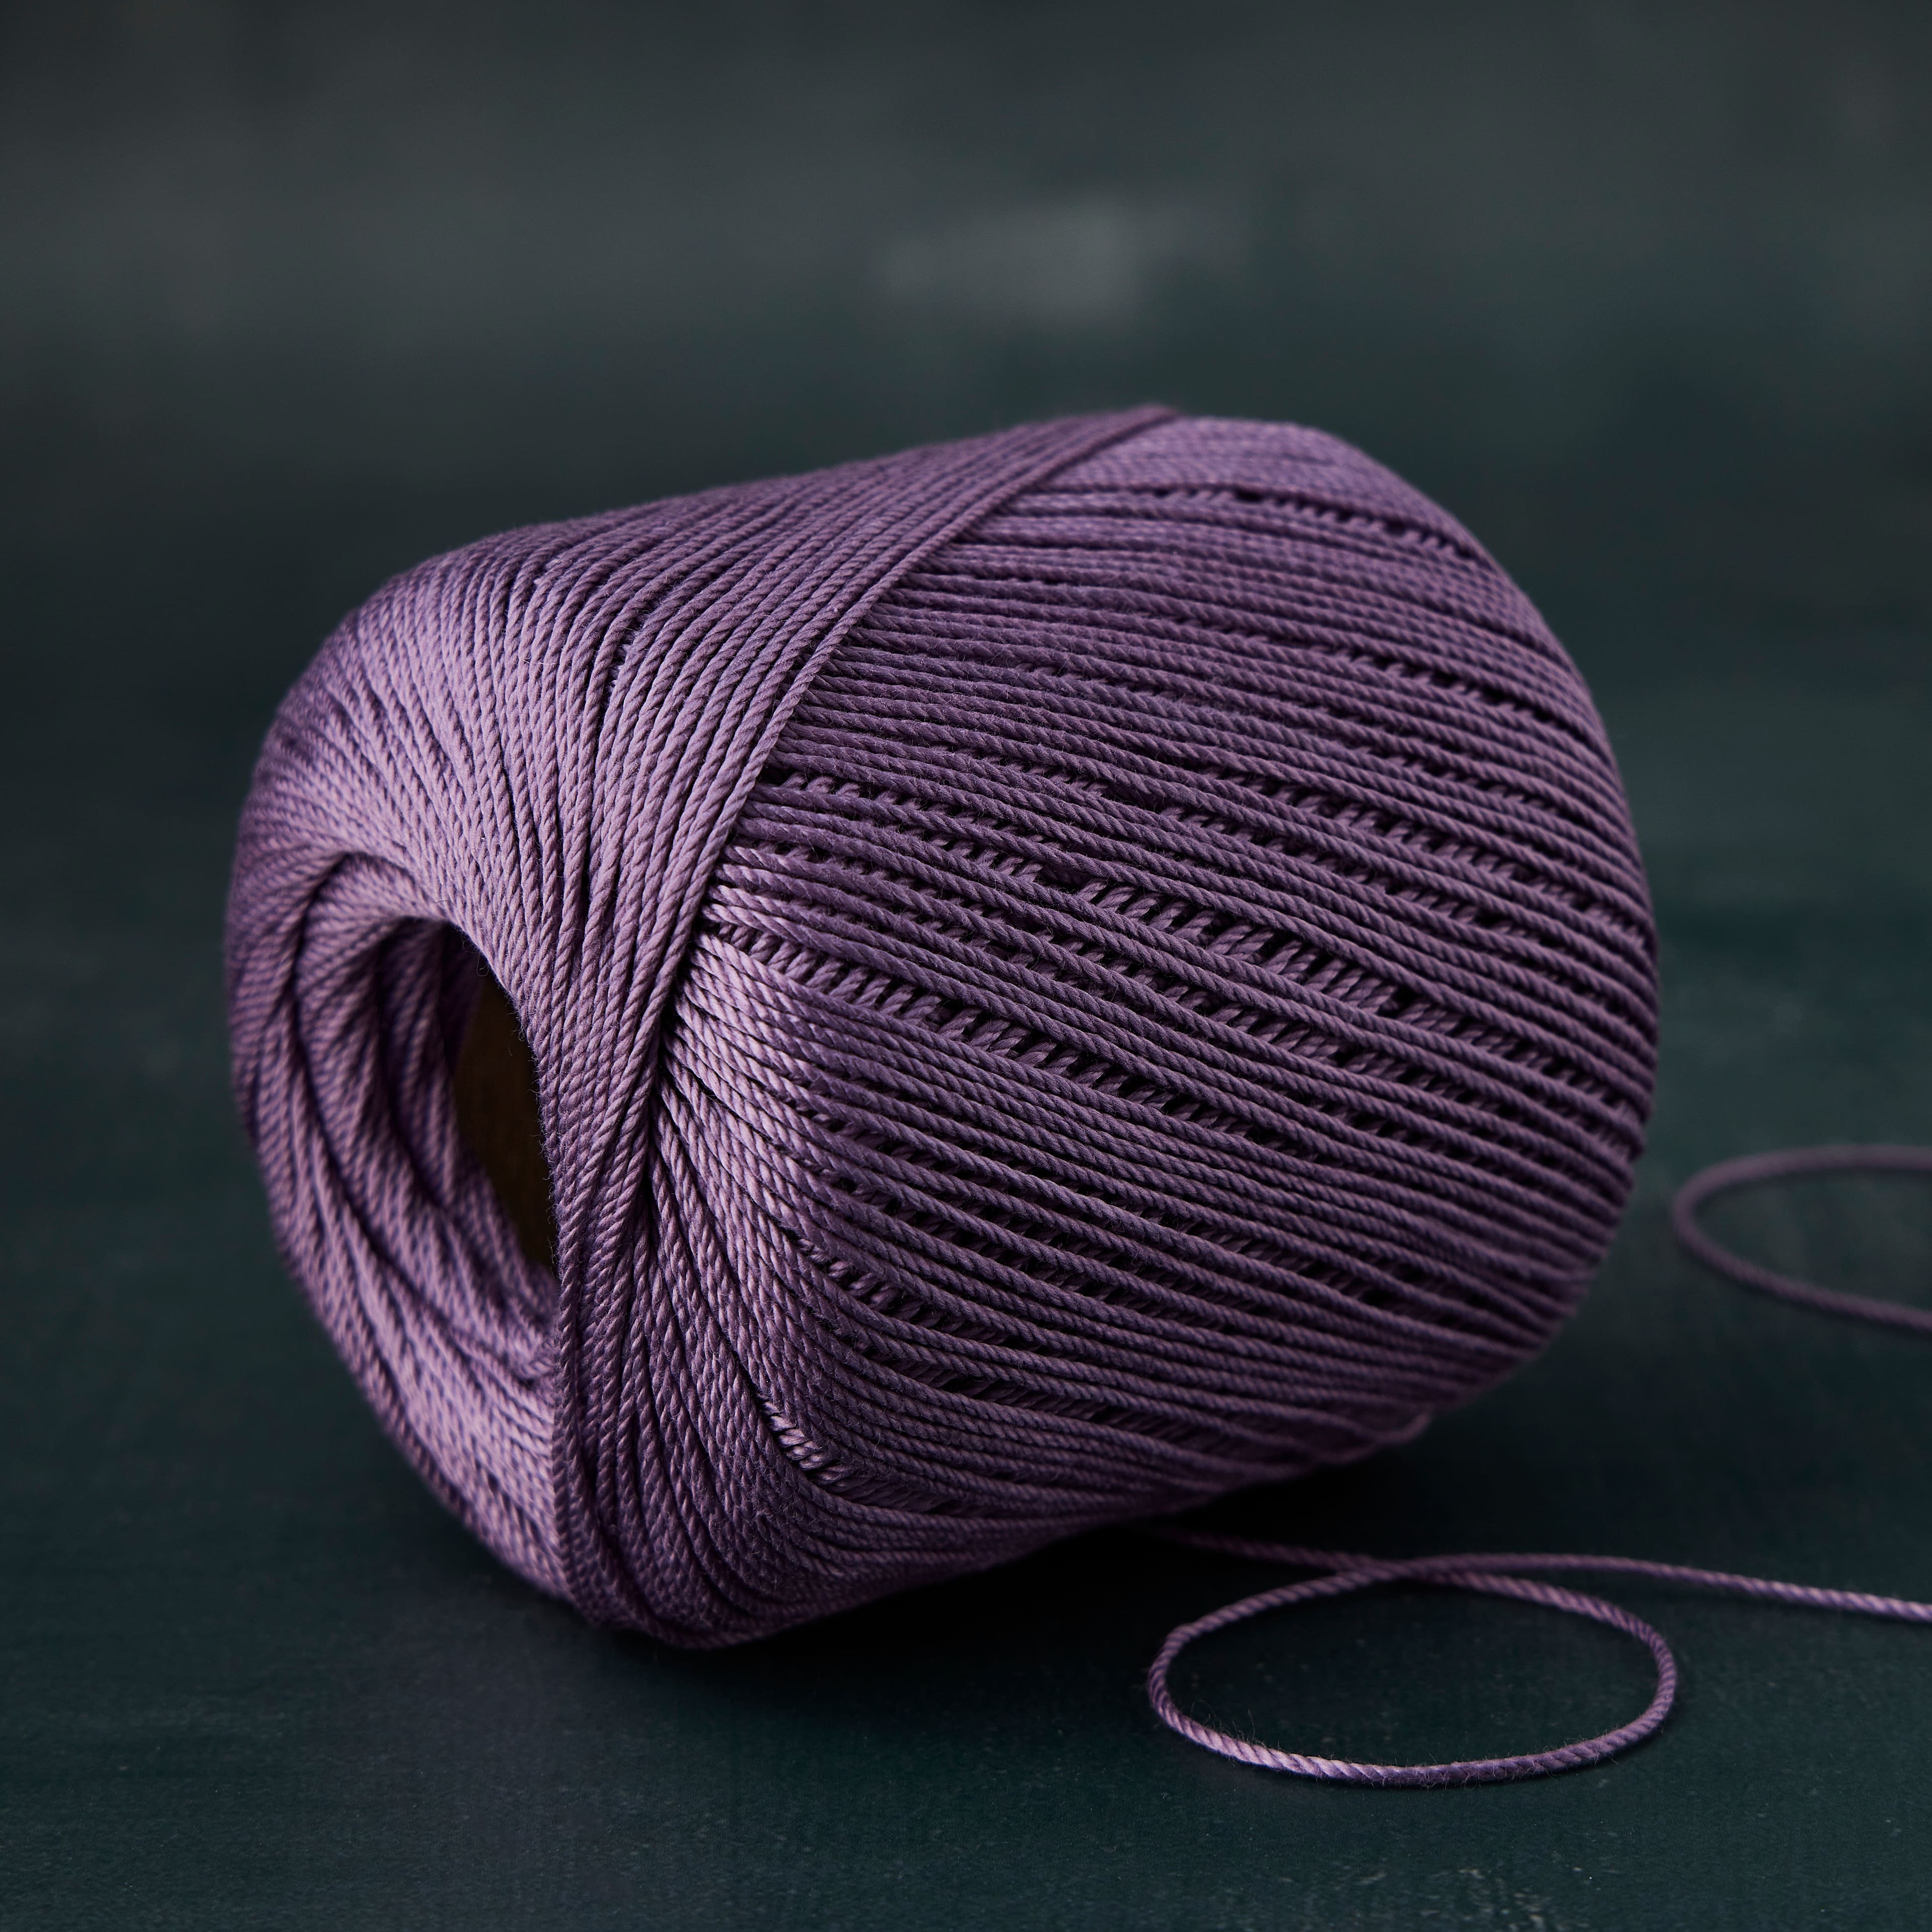 Aunt Lydia's Fashion Crochet Thread Size 3 Soft Mauve 182-1040 (3-Skeins) Same Dye Lot Size 30 Soft 100% Mercerized Cotton Bundle with 1 Artsiga